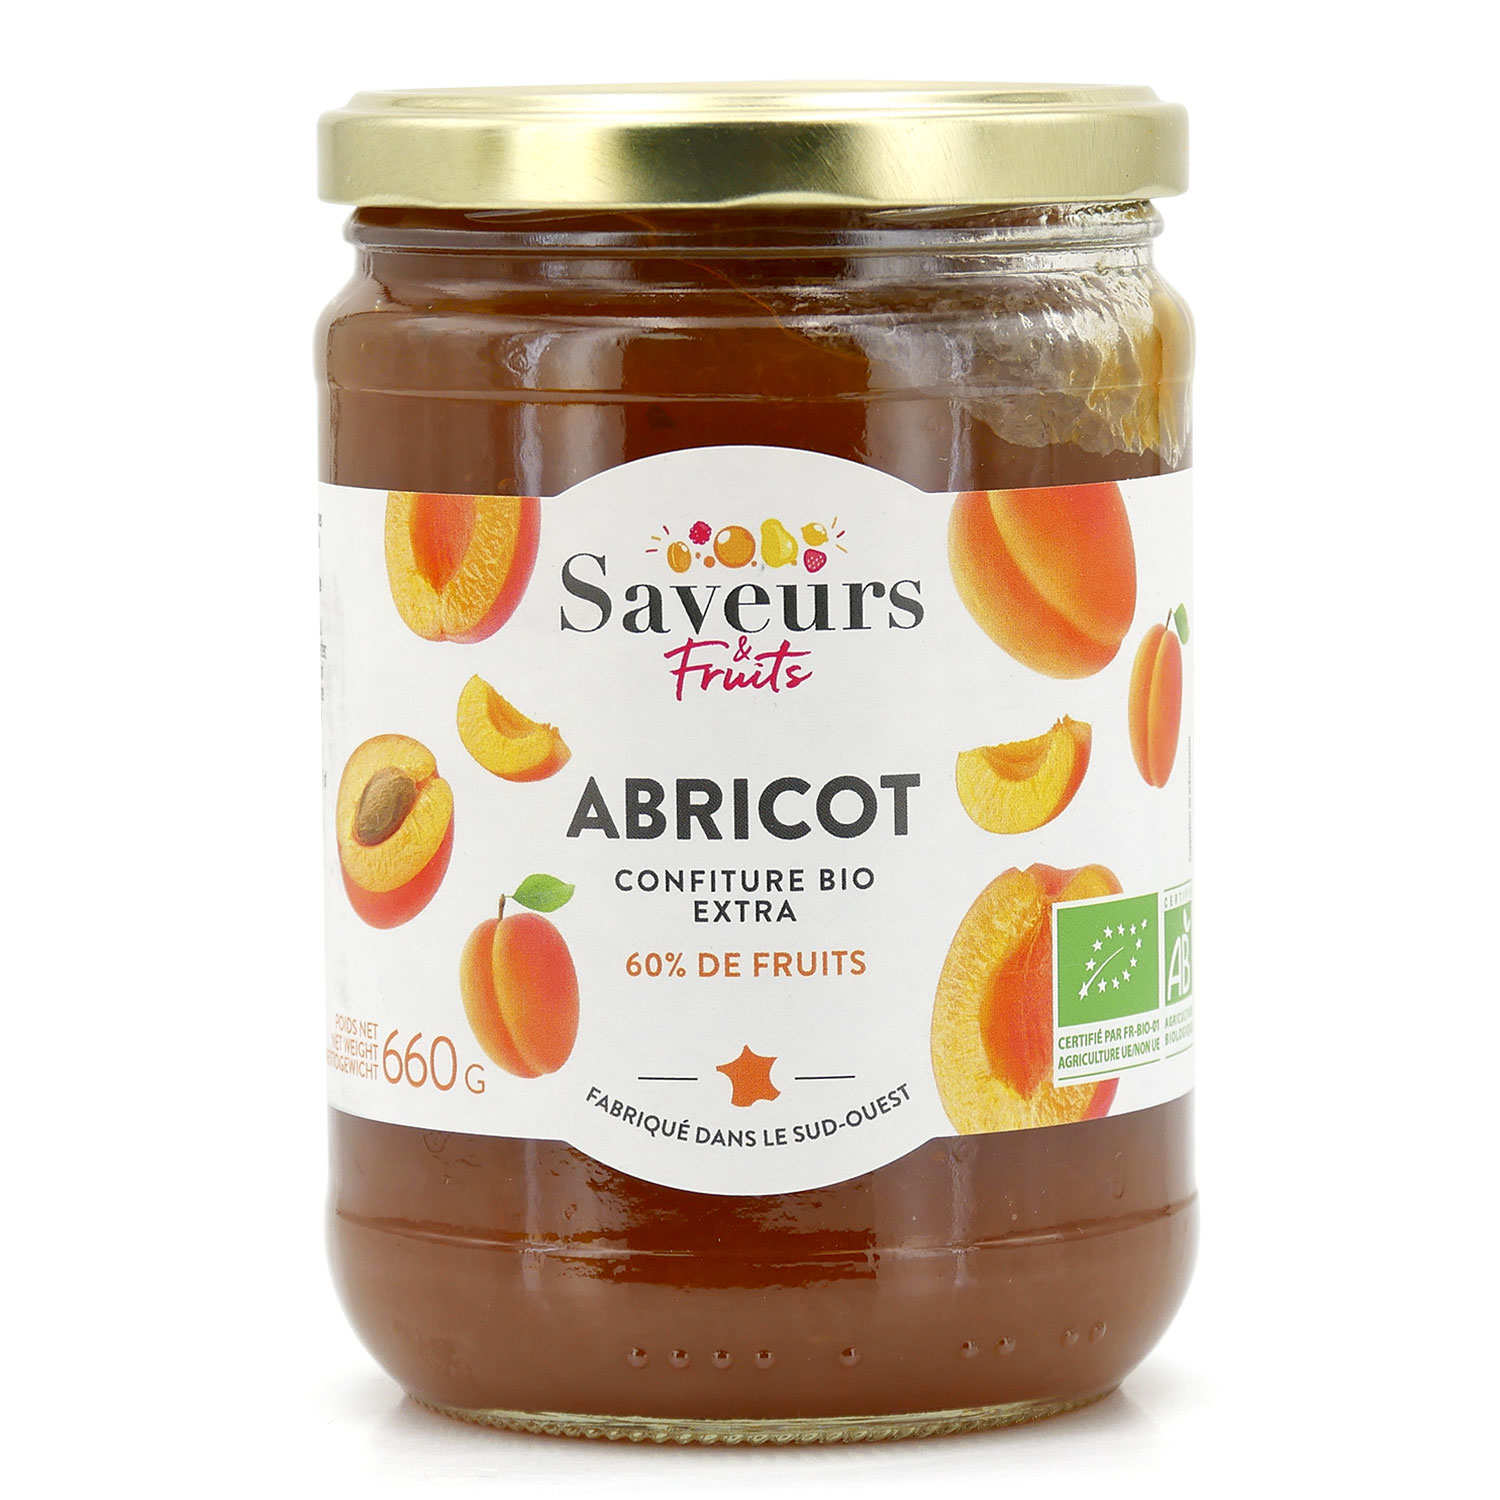 Extra organic apricot jam - Family size - Saveurs et Fruits